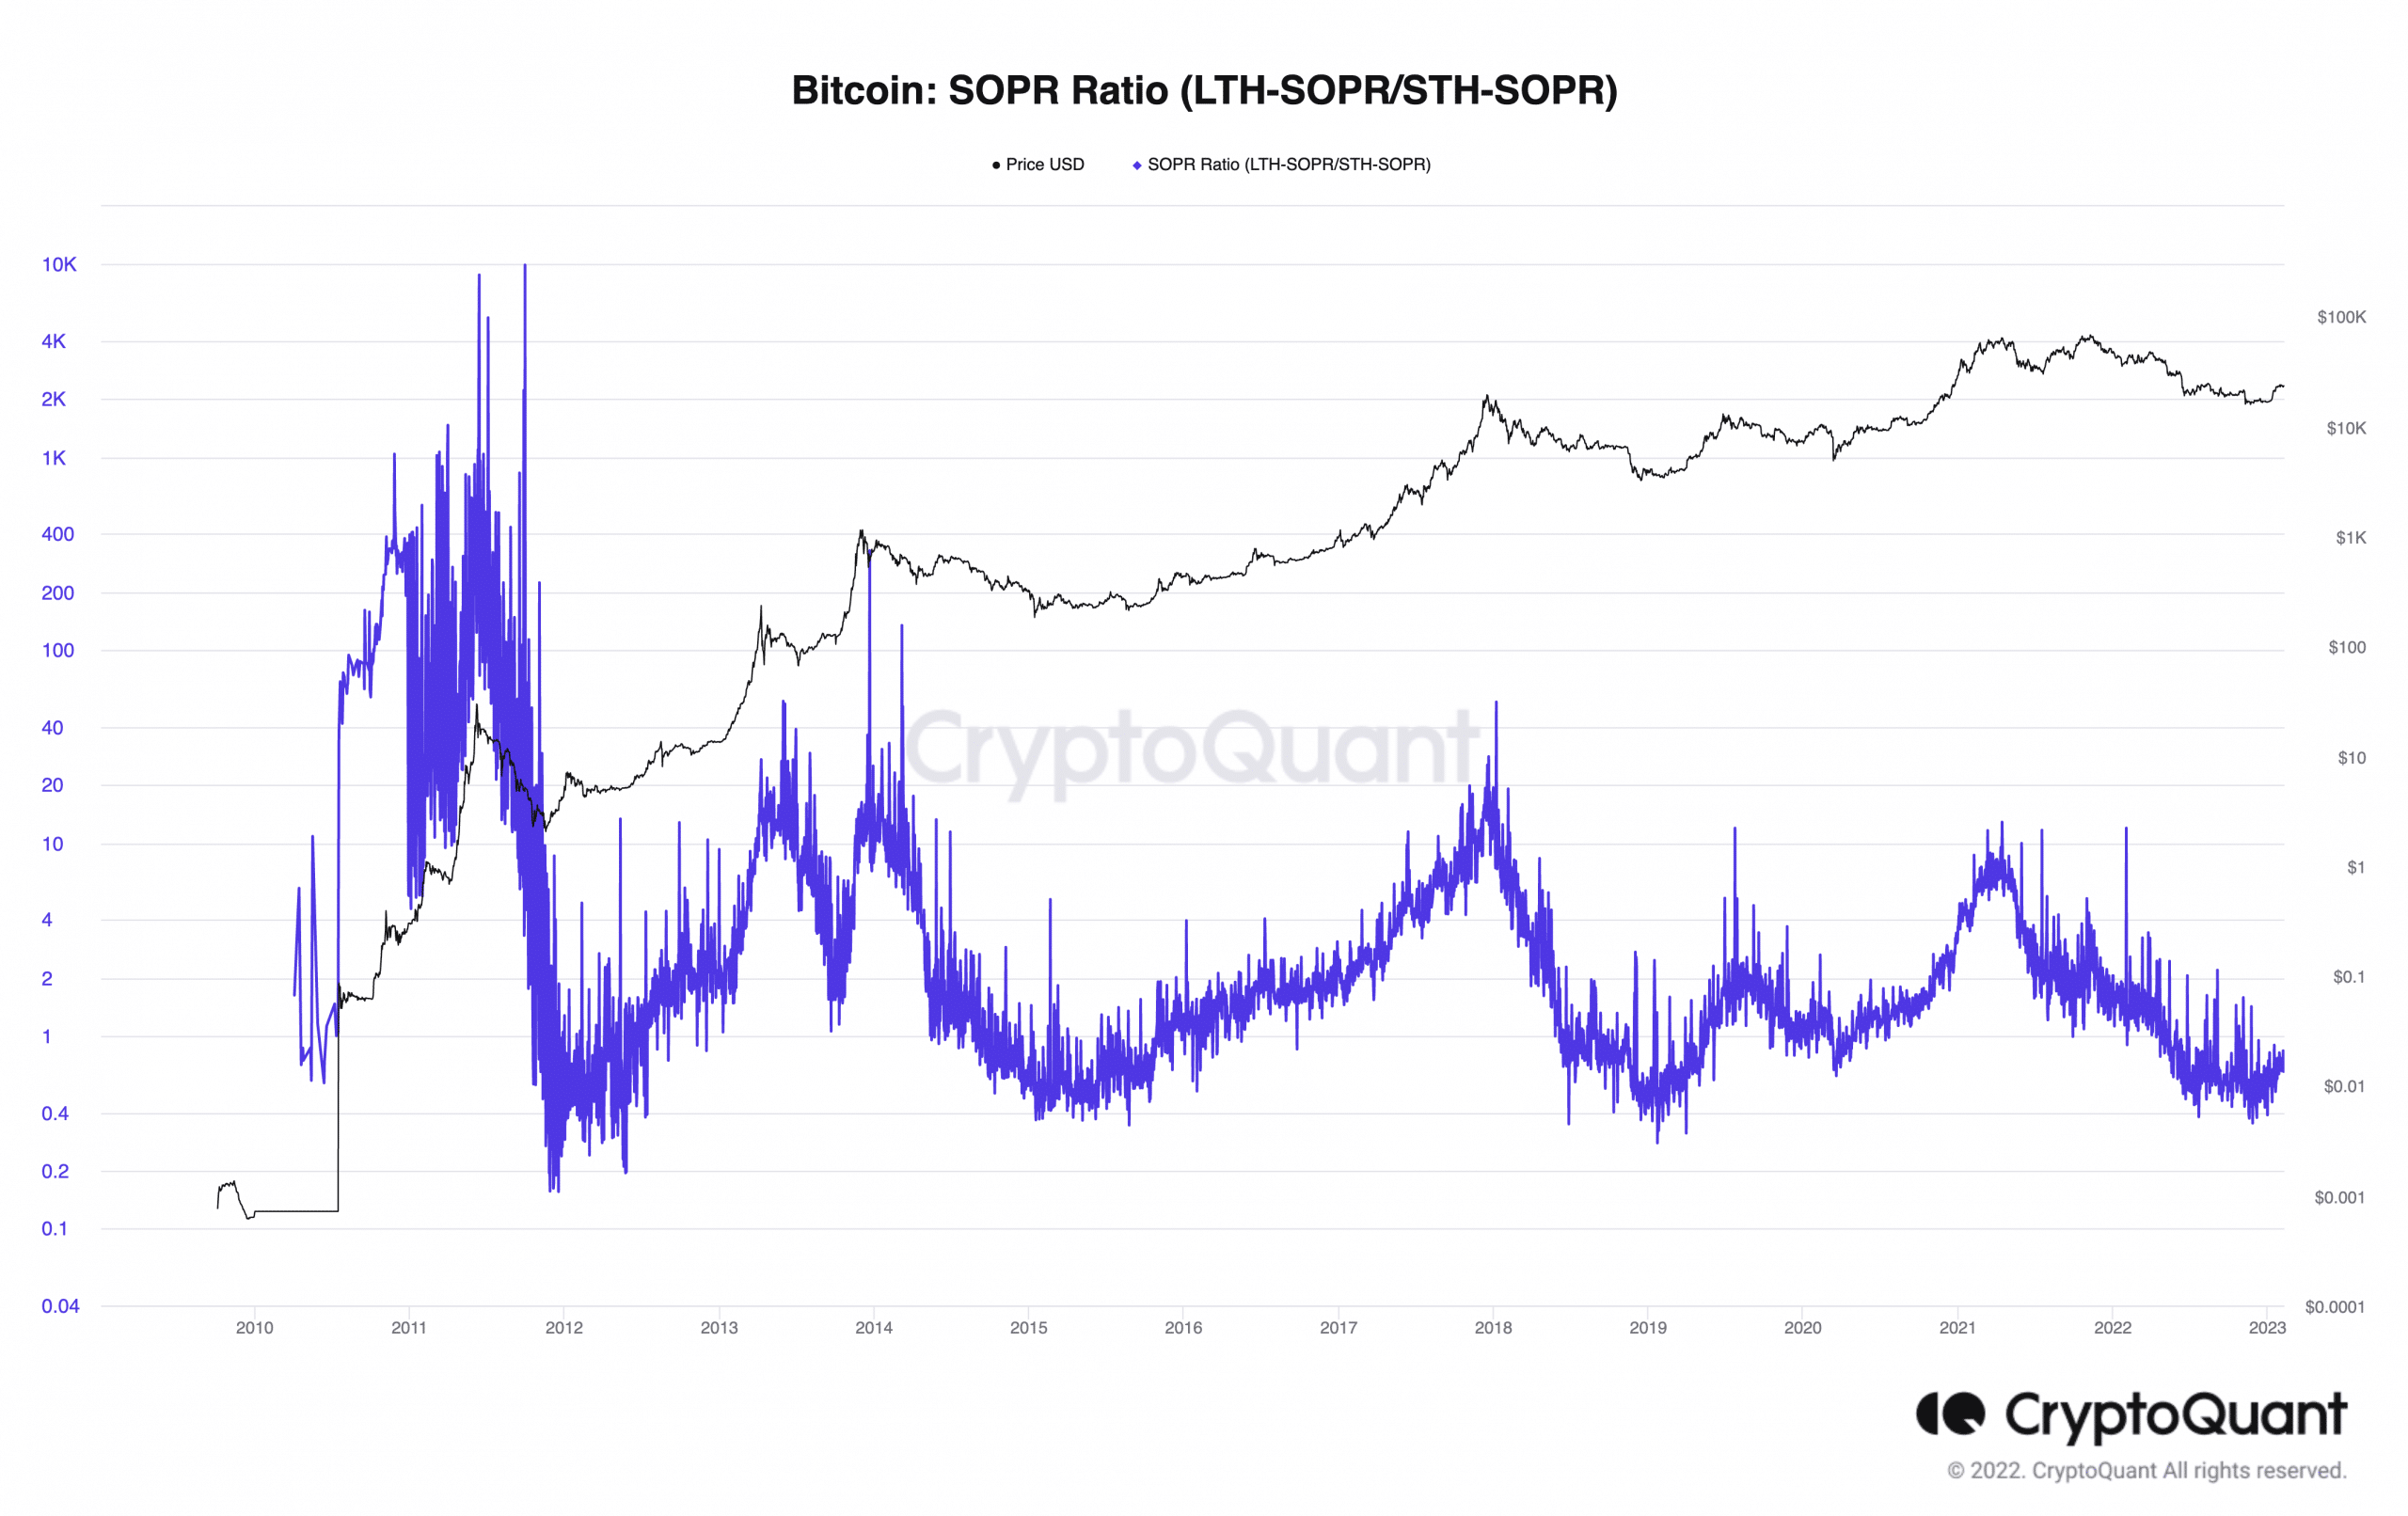 Bitcoin SOPR ratio